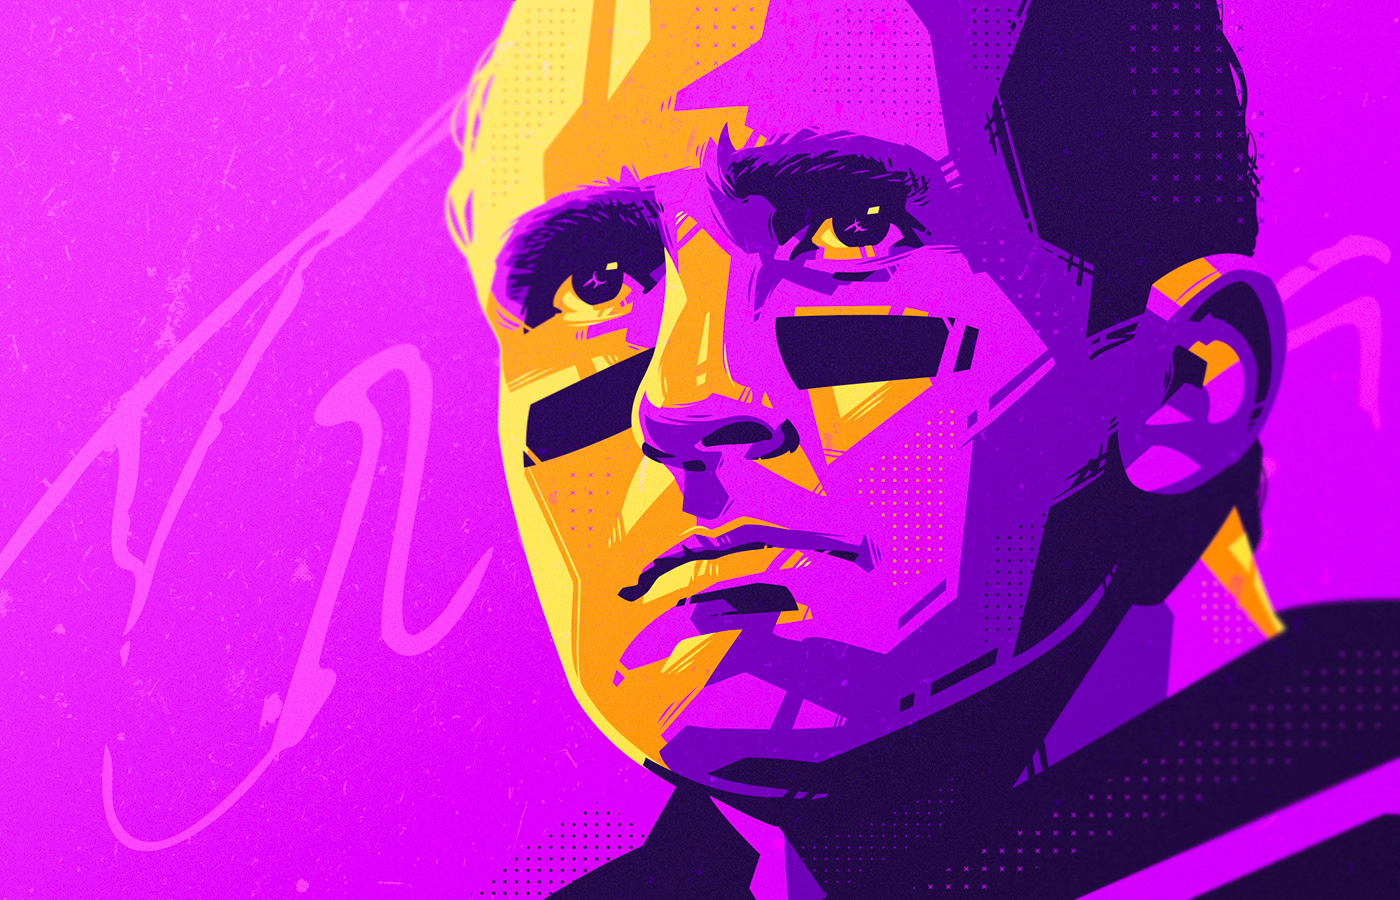 aaron donald american football branding  football ILLUSTRATION  nfl sports sports illustration Tom Brady portrait